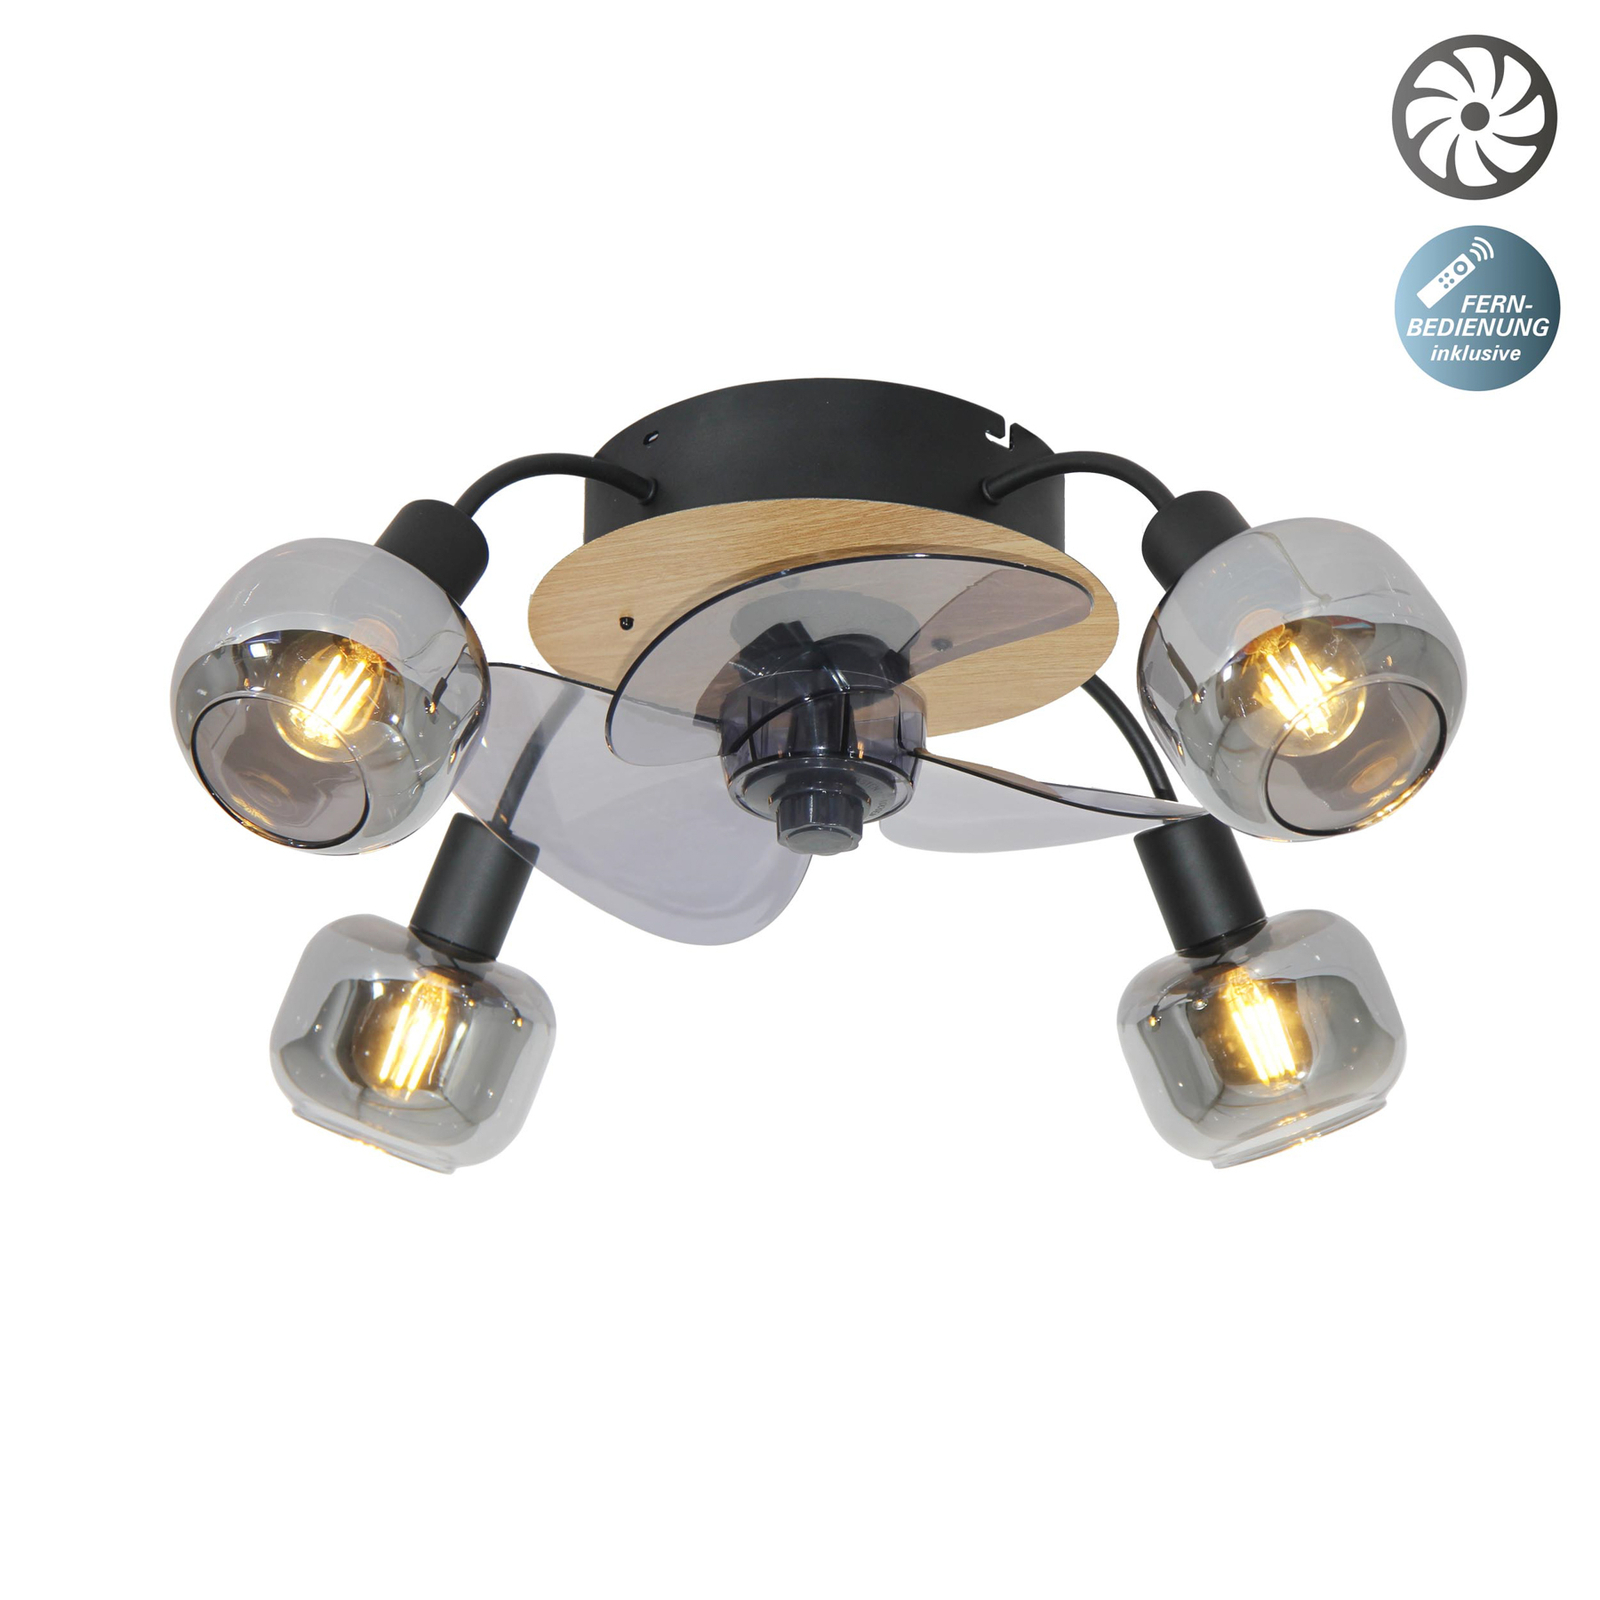 Fumoso ceiling fan, four E14 smoked glass lights